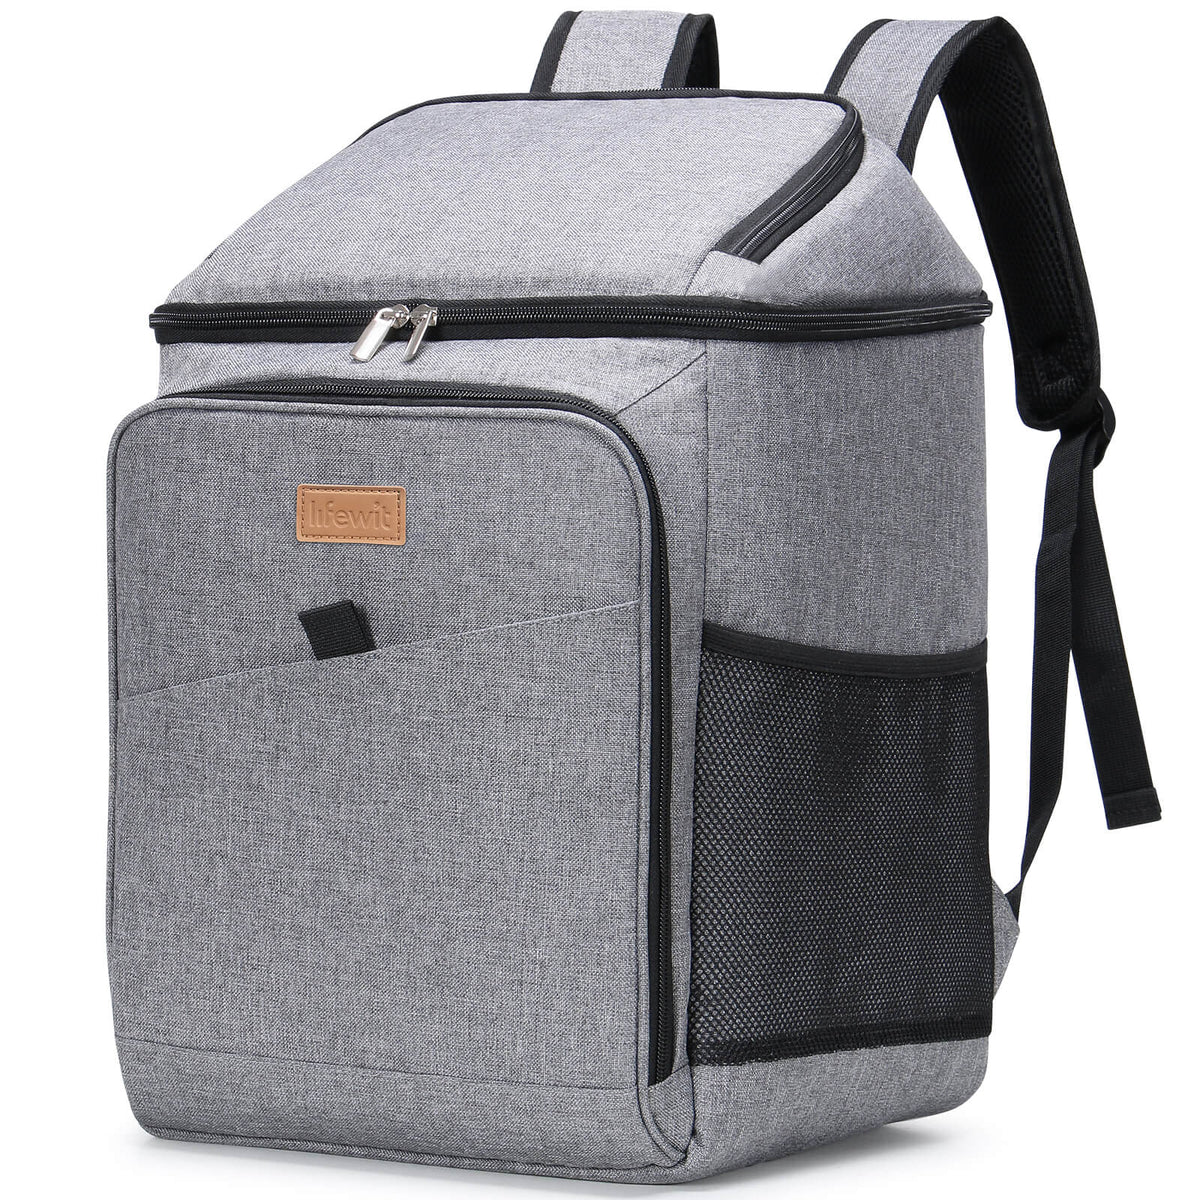 Cool Bag Rucksack for Picnic & Camping – Lifewitstore